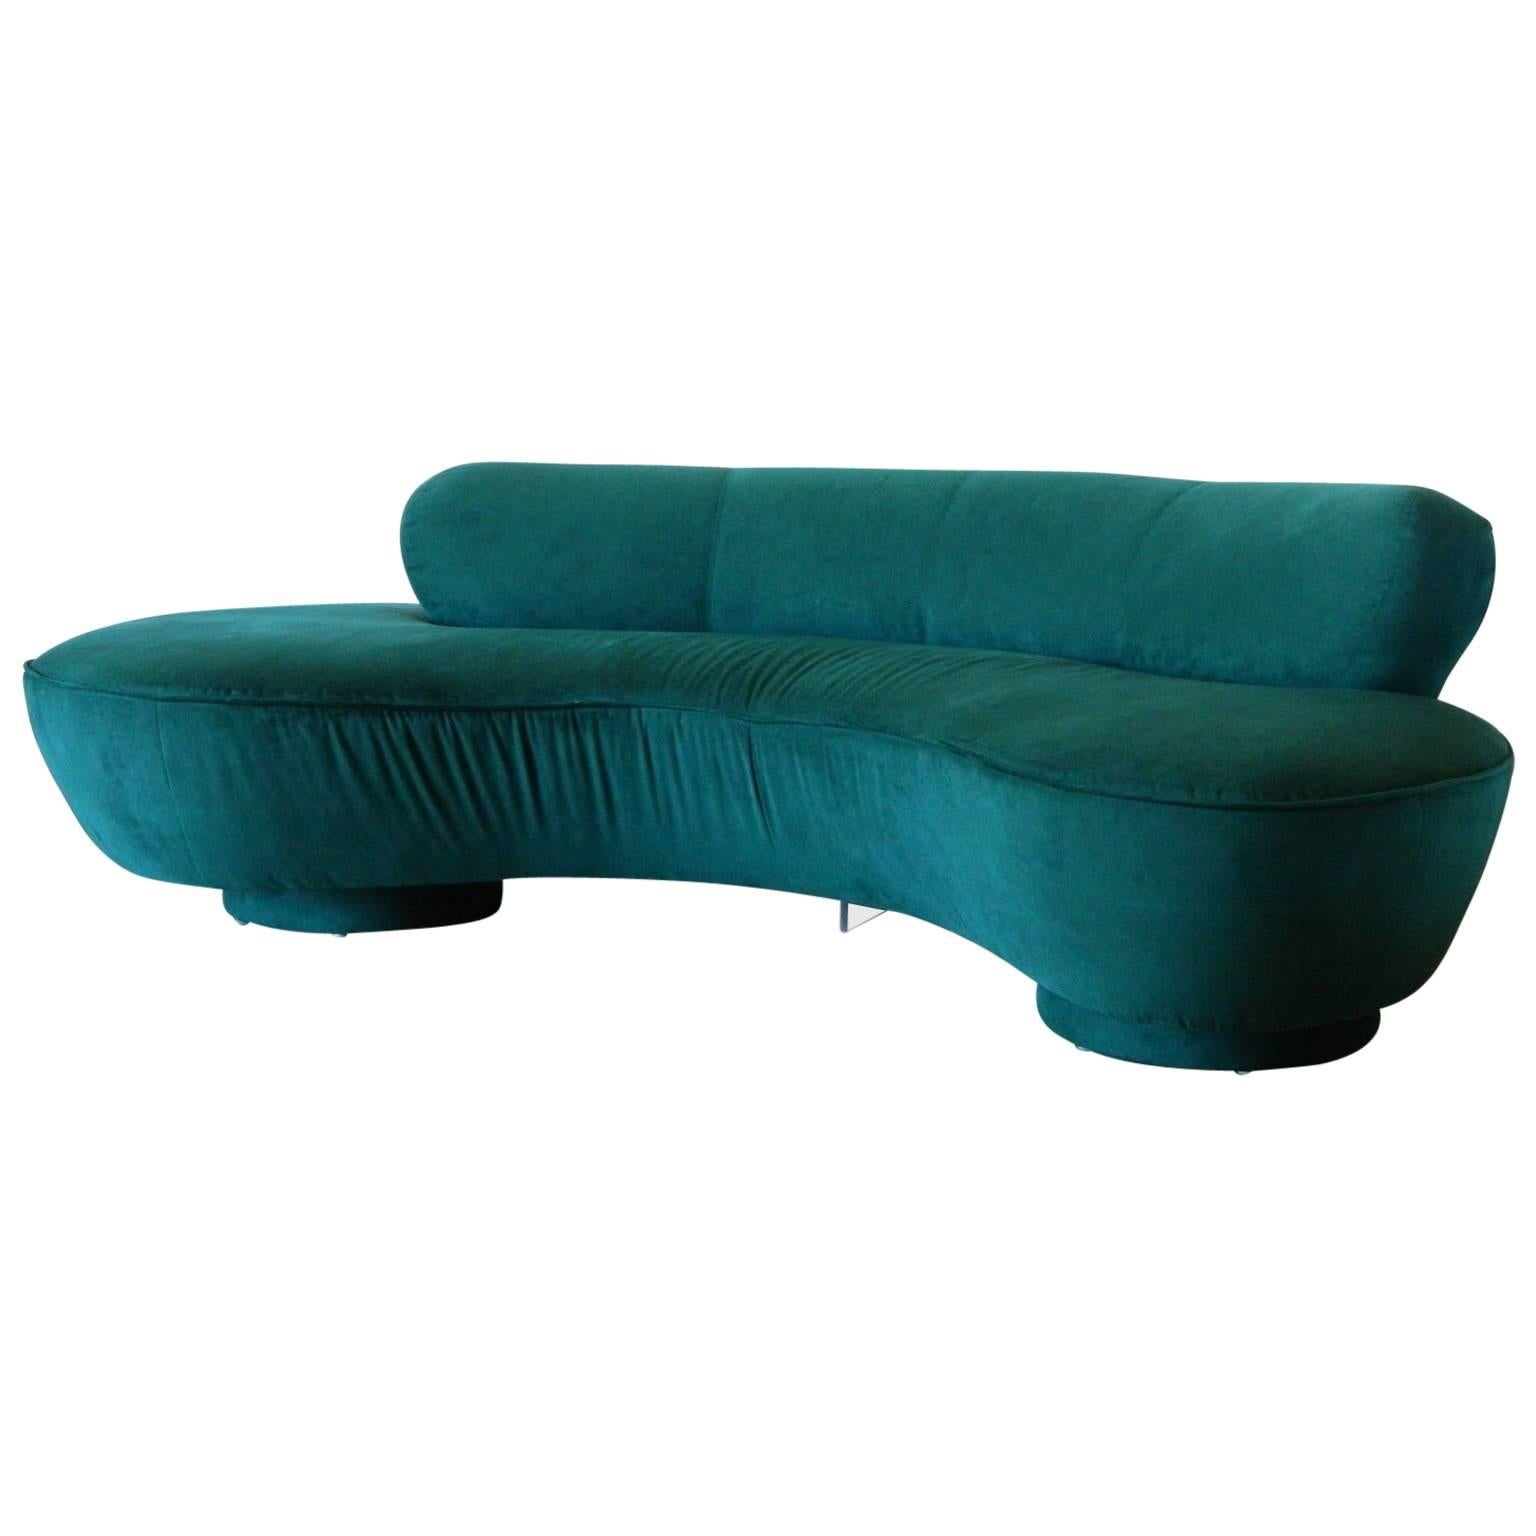 Vladimir Kagan Serpentine Sofa For Sale